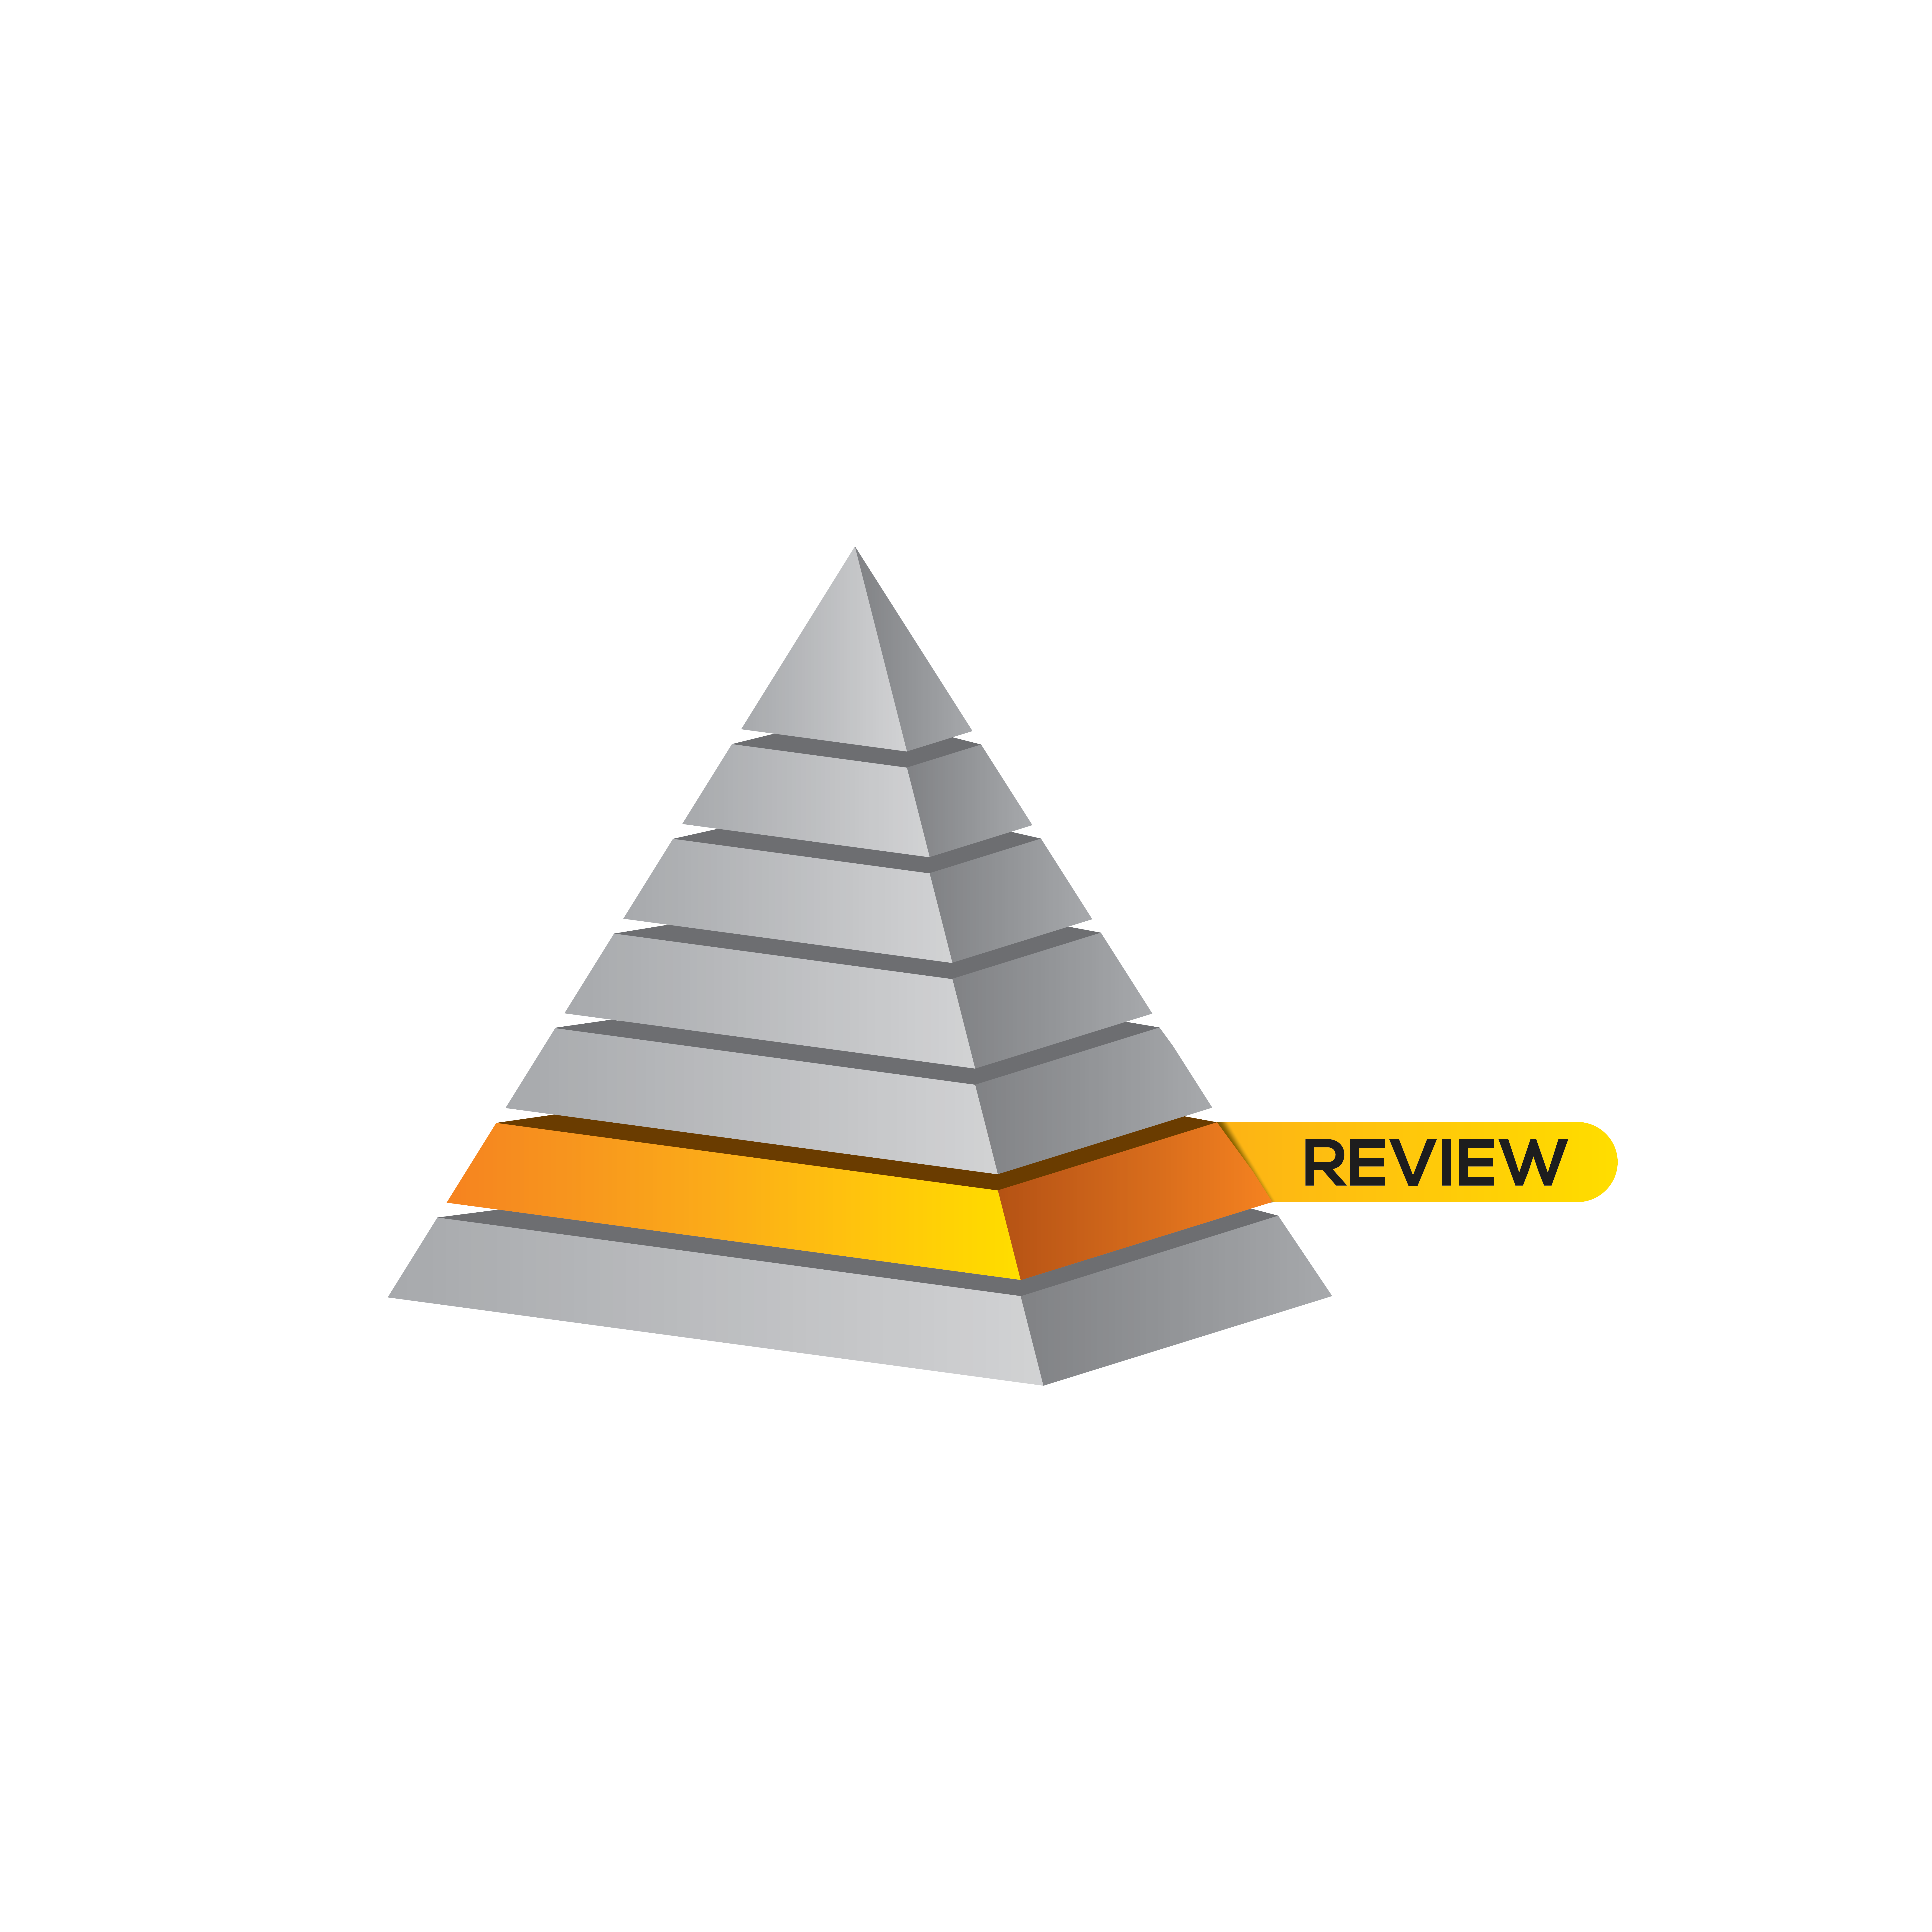 pyramid review